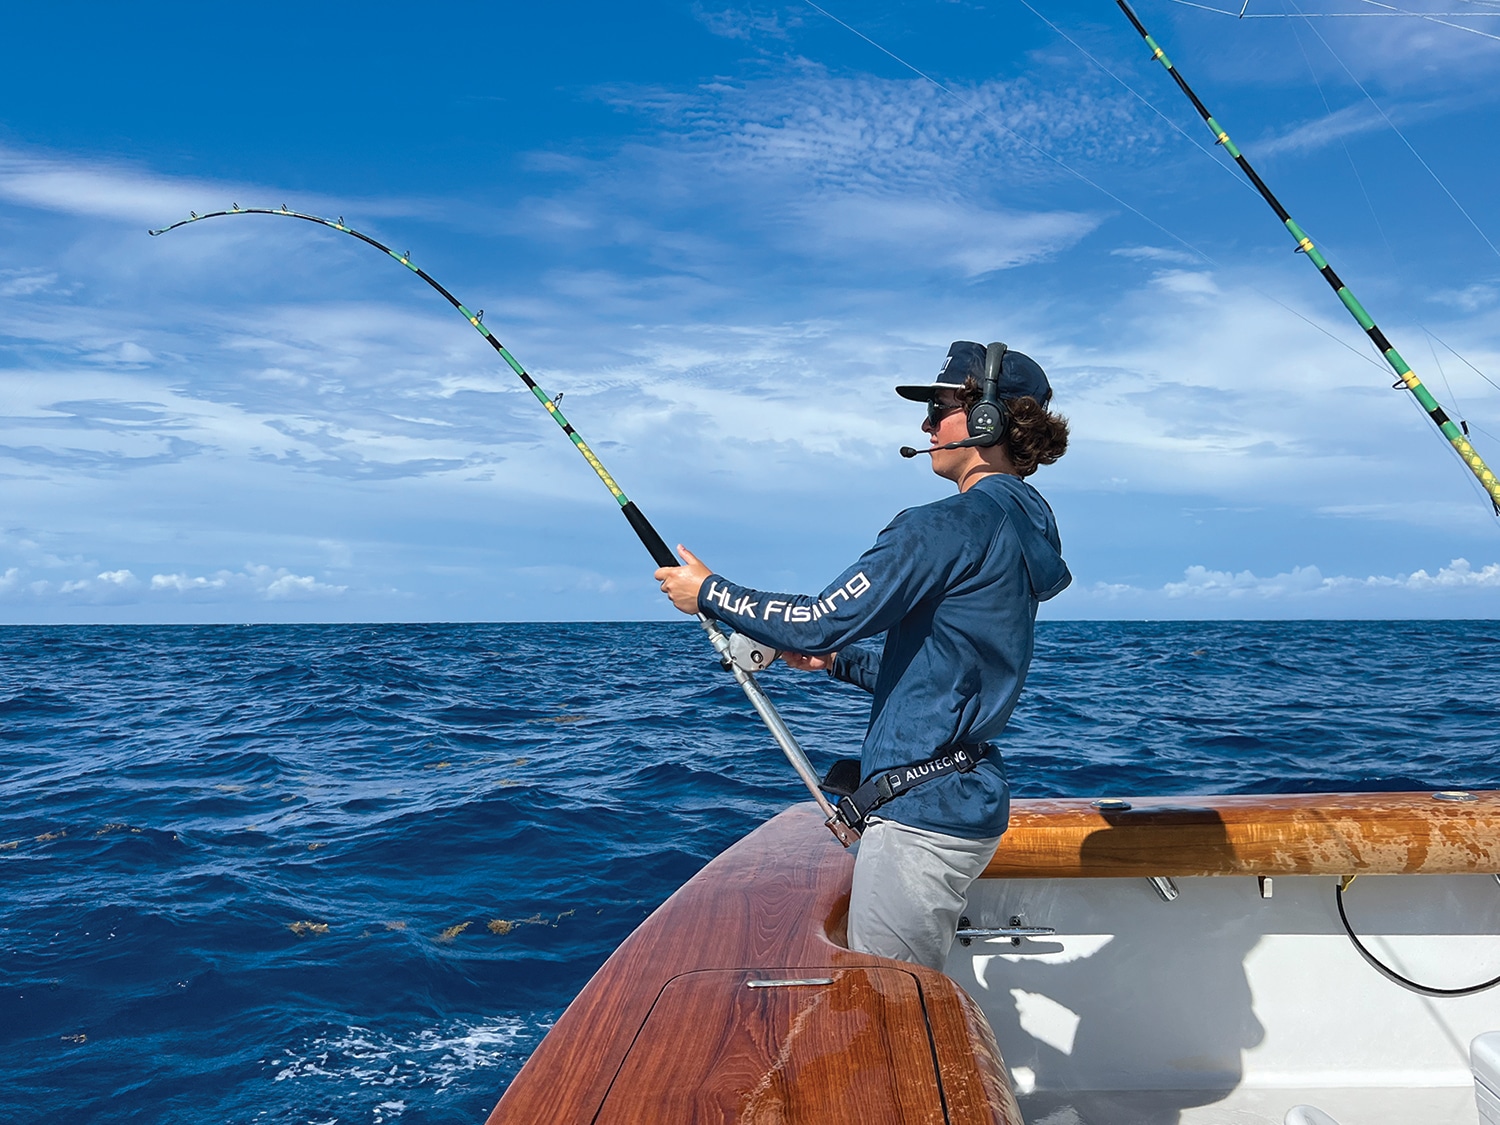 Reel Obsession Sport Fishing - Island Fisherman Magazine